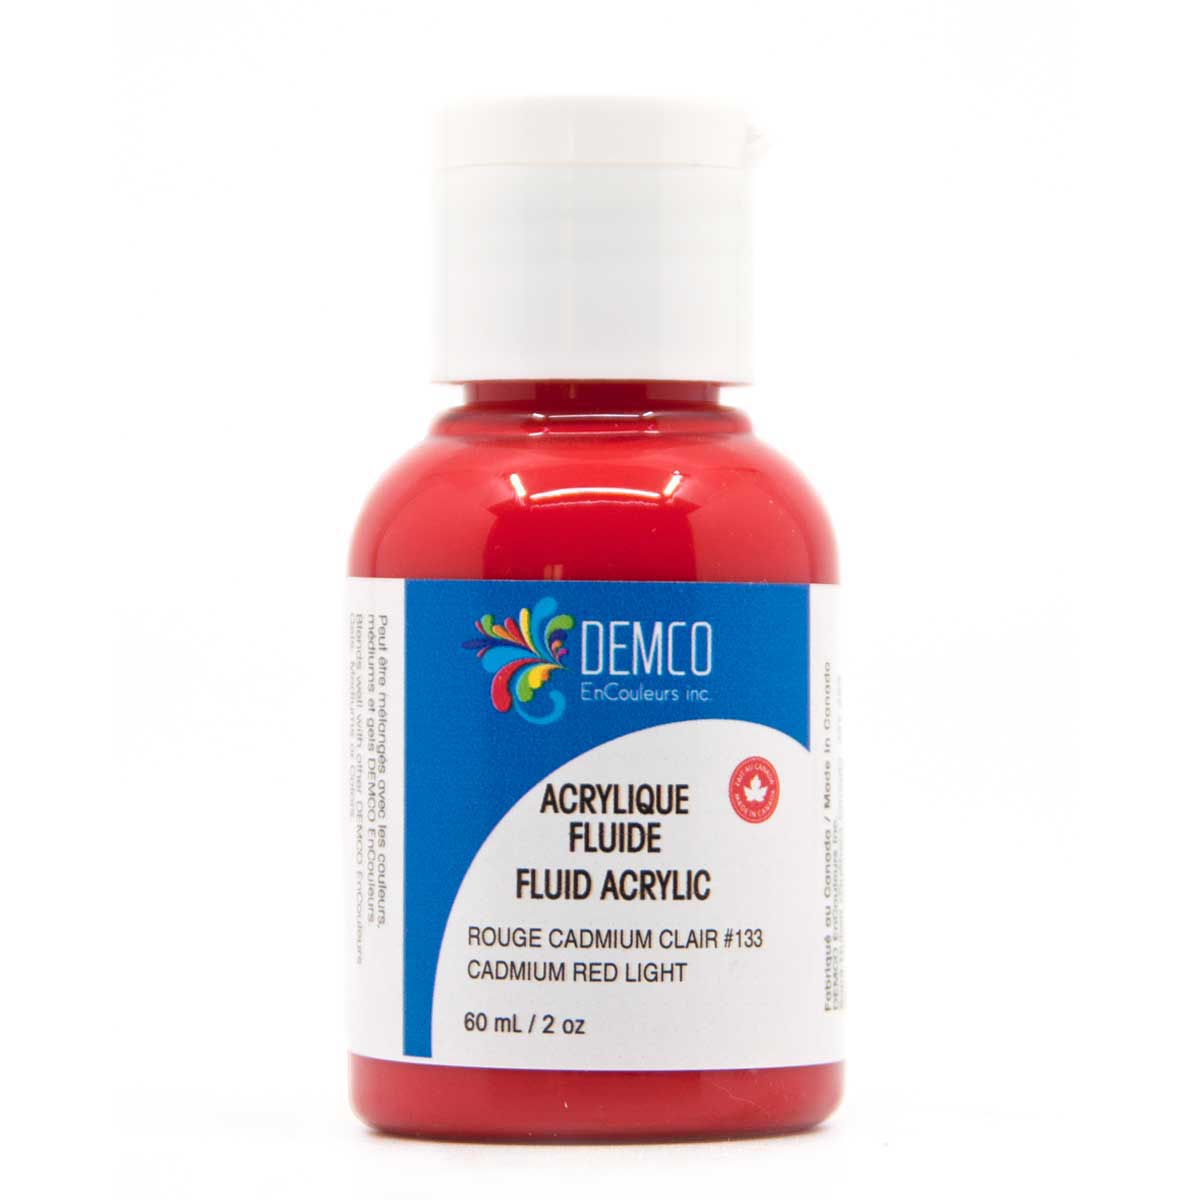 Demco Fluid Acrylic Paint - Cadmium Red Light (Hue) 60 ml